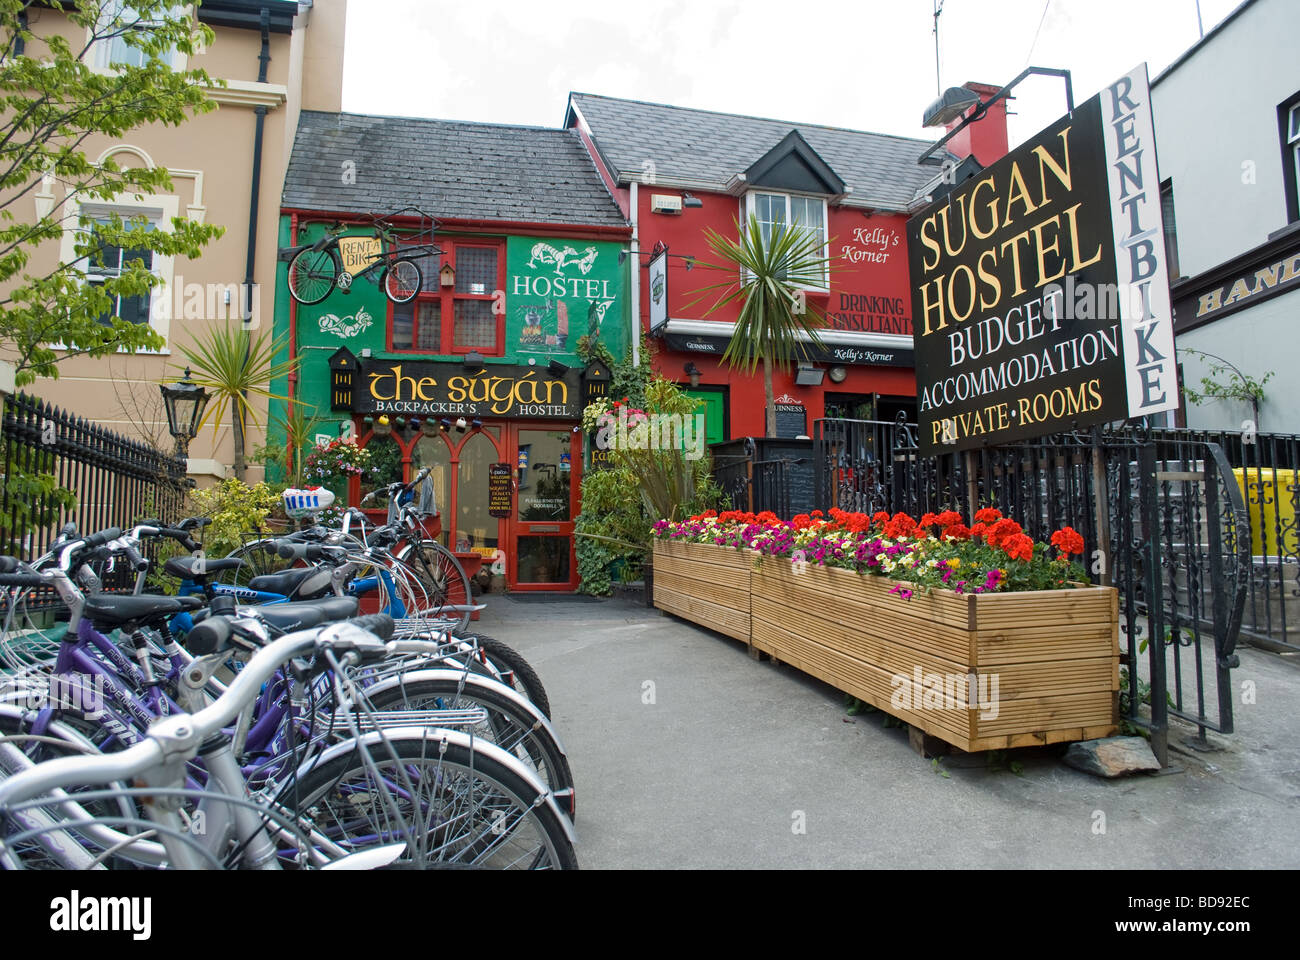 Sugan Backpacker's Hostel in Clonmel, County Tipperary, Ireland Stock Photo